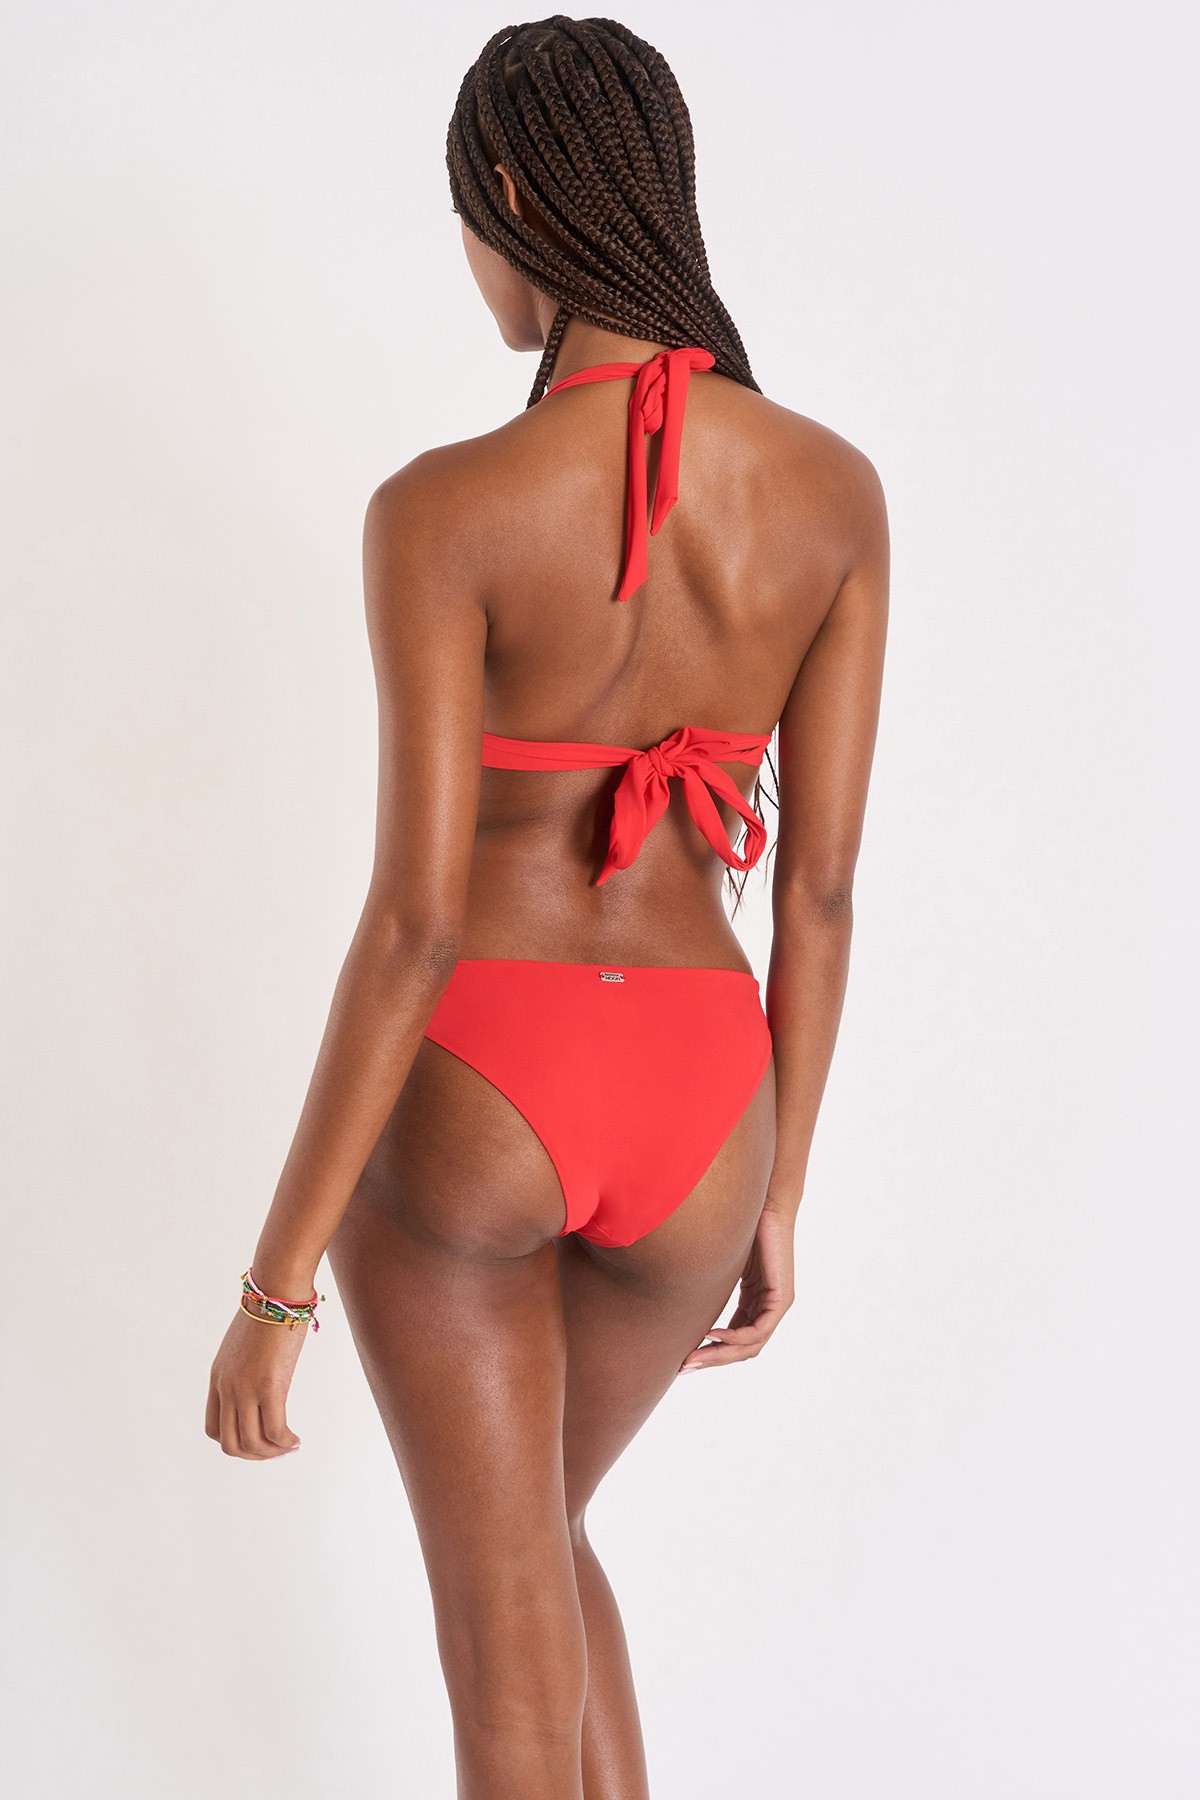 31202 Pour Moi Atlas Underwired Bikini Top - 31202 Red